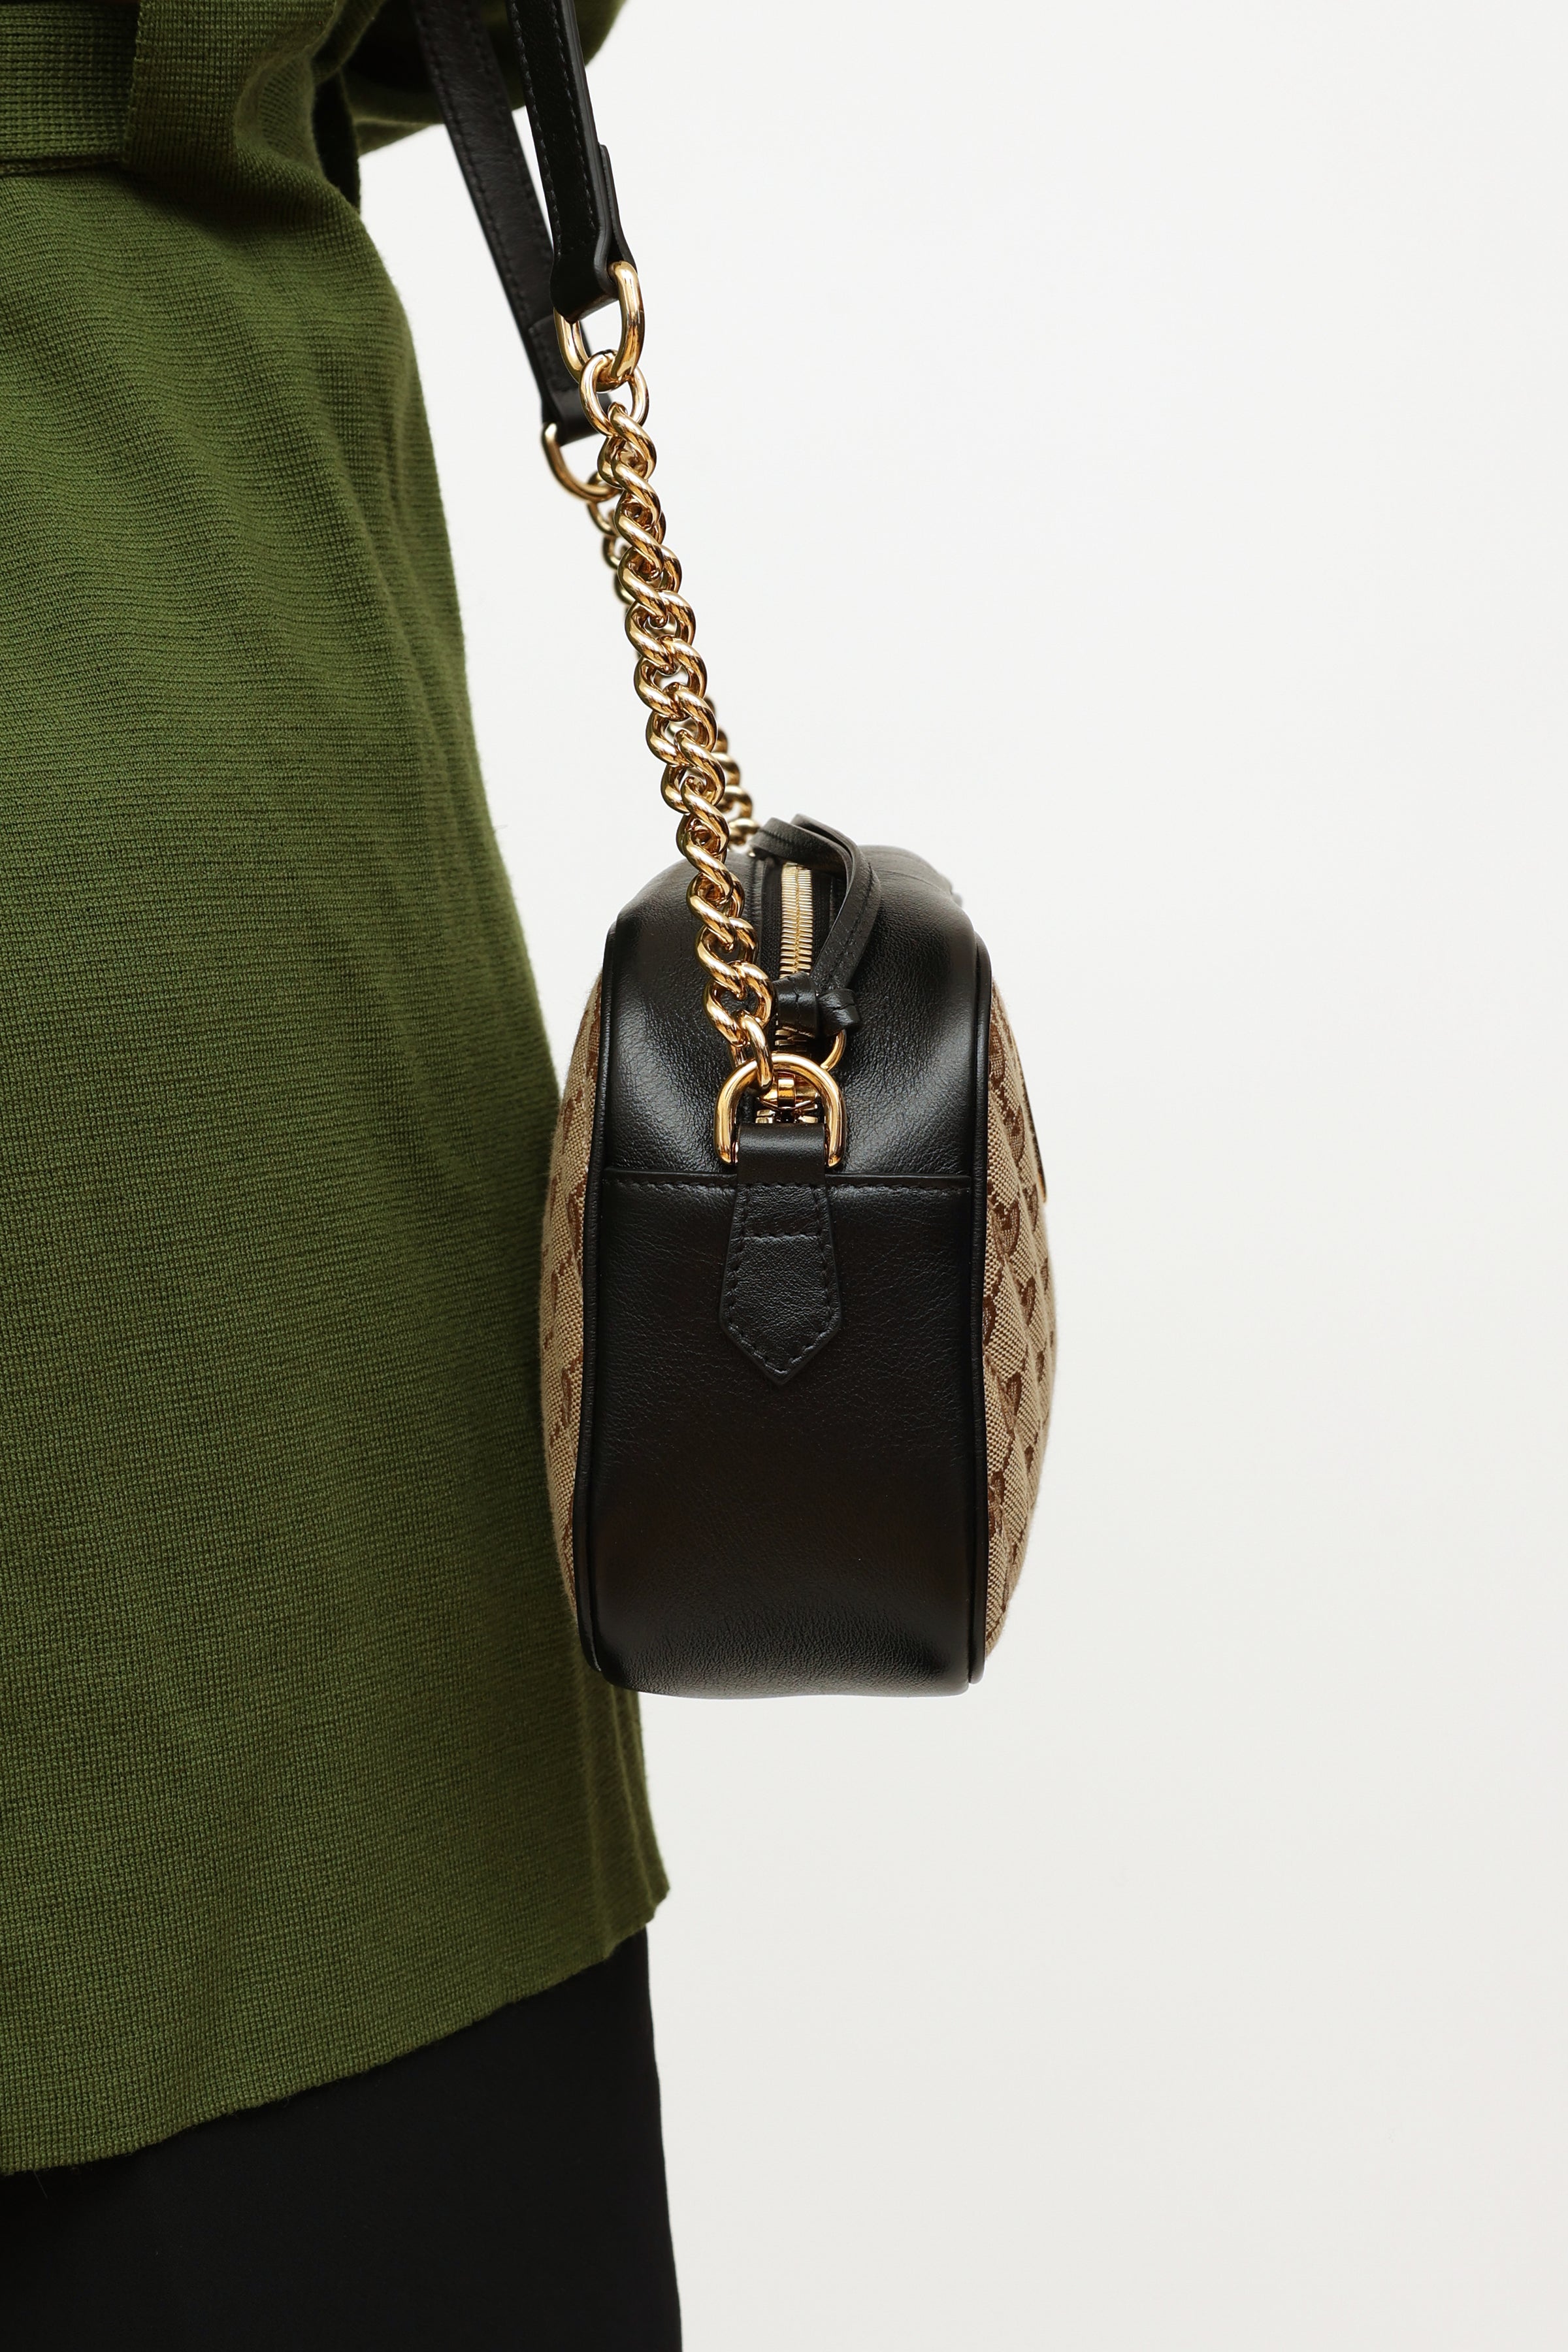 Gucci Monogram Matelasse Diagonal Small GG Marmont Chain Shoulder Bag Beige Black